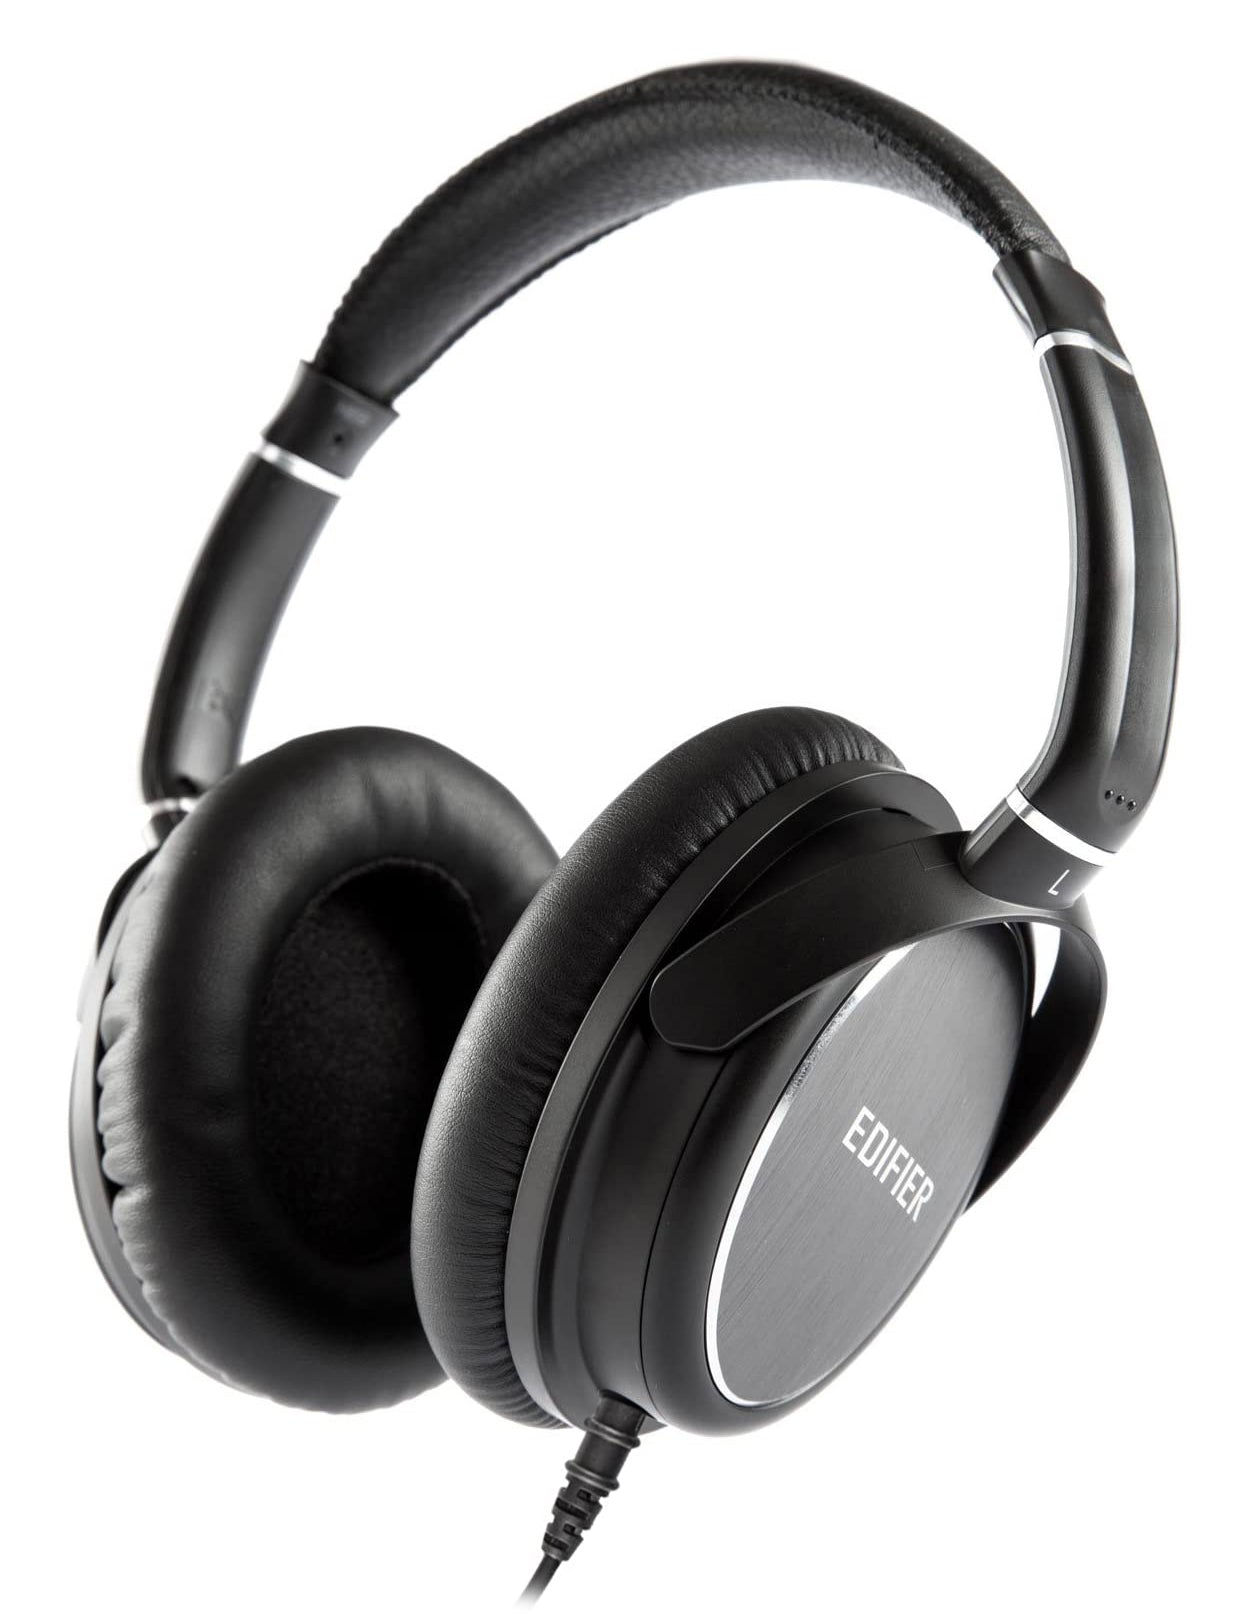 Edifier H850 Pro Series Audio Headphones - Black